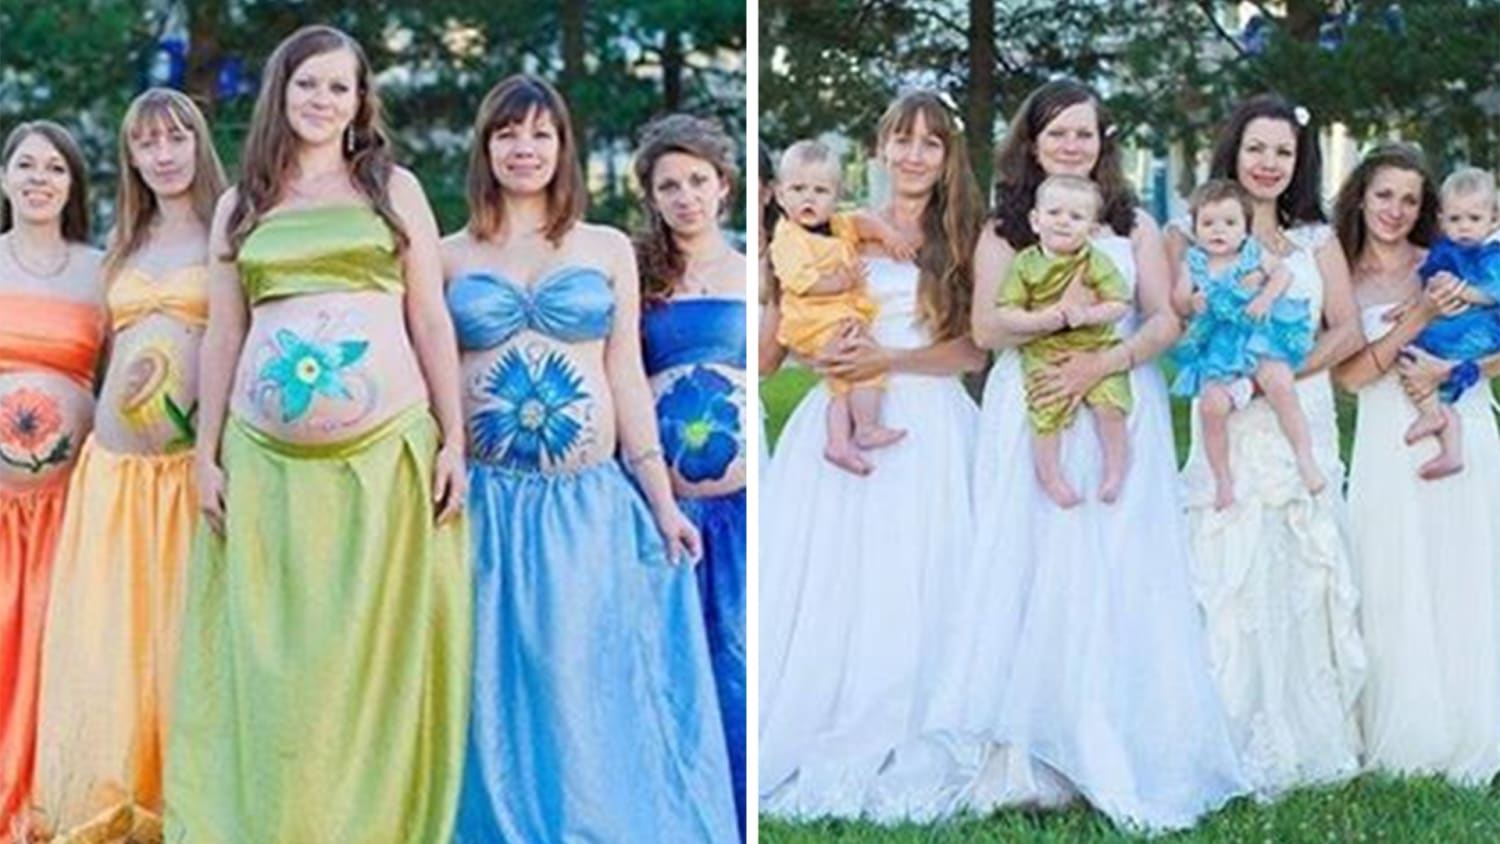 Stunning 'rainbow babies' photo inspires stories of loss ...